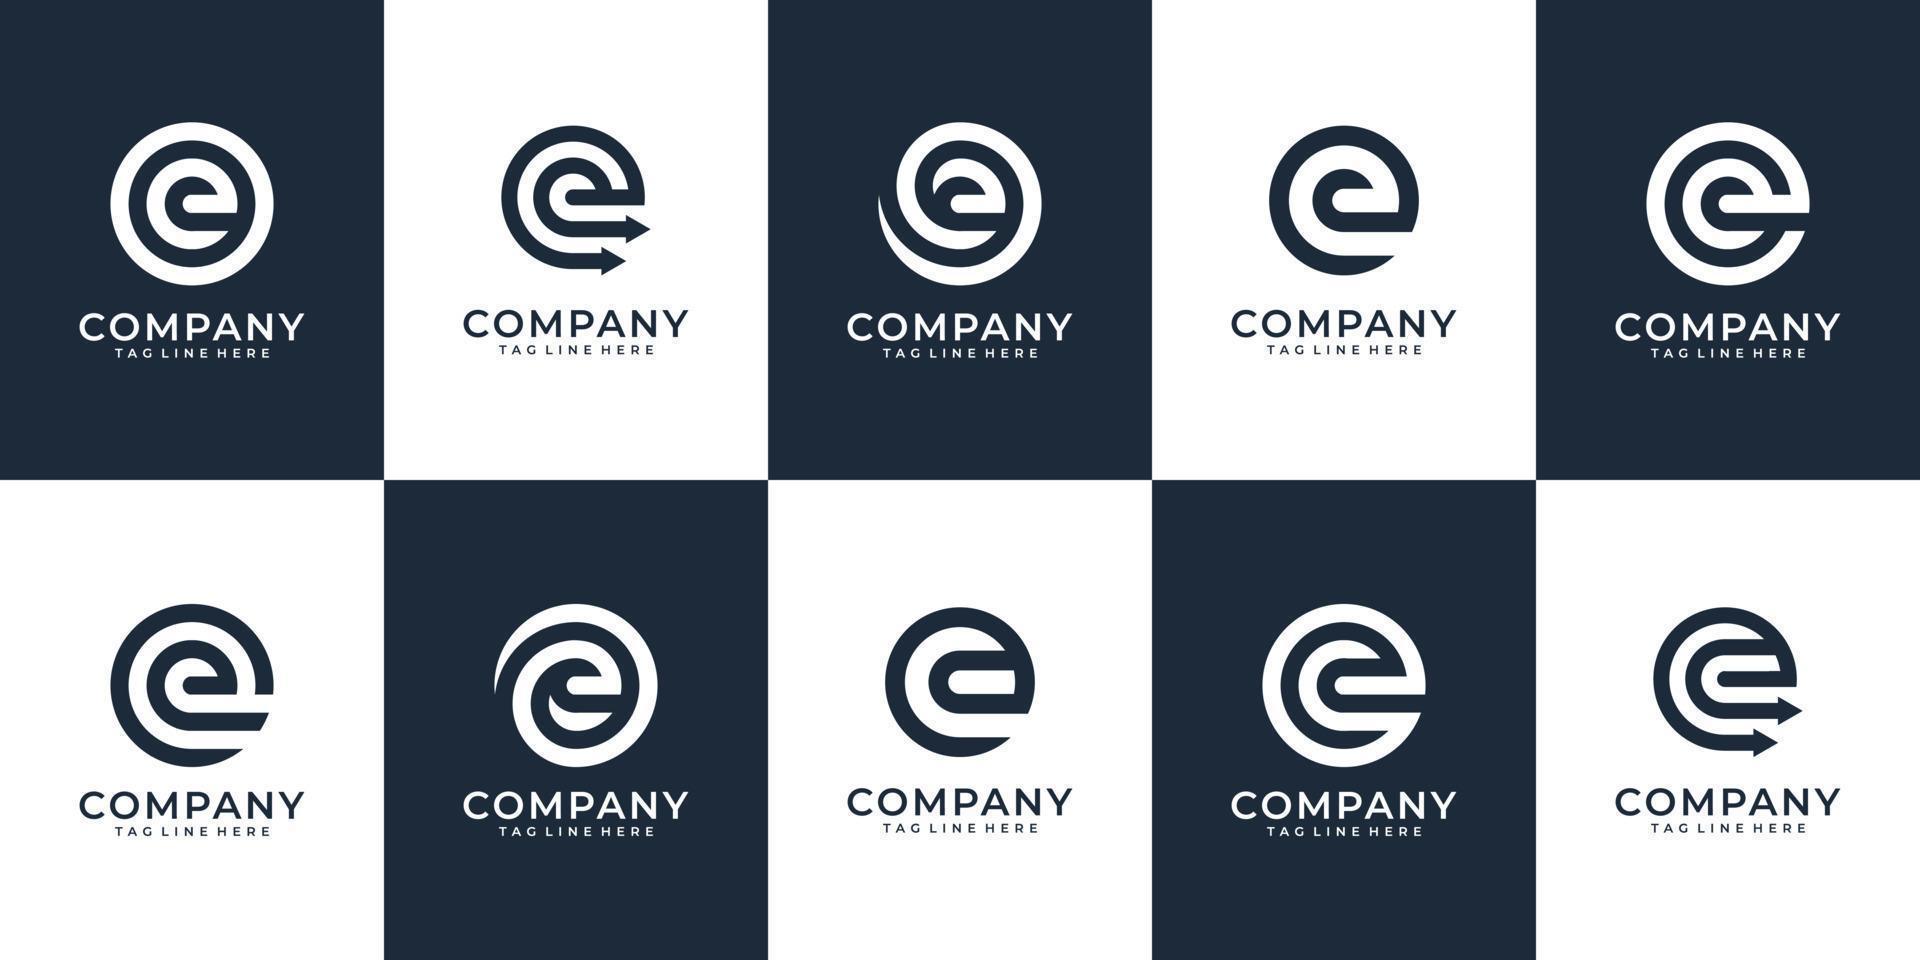 conjunto de paquete de concepto de logotipo de letra e corporativa vector